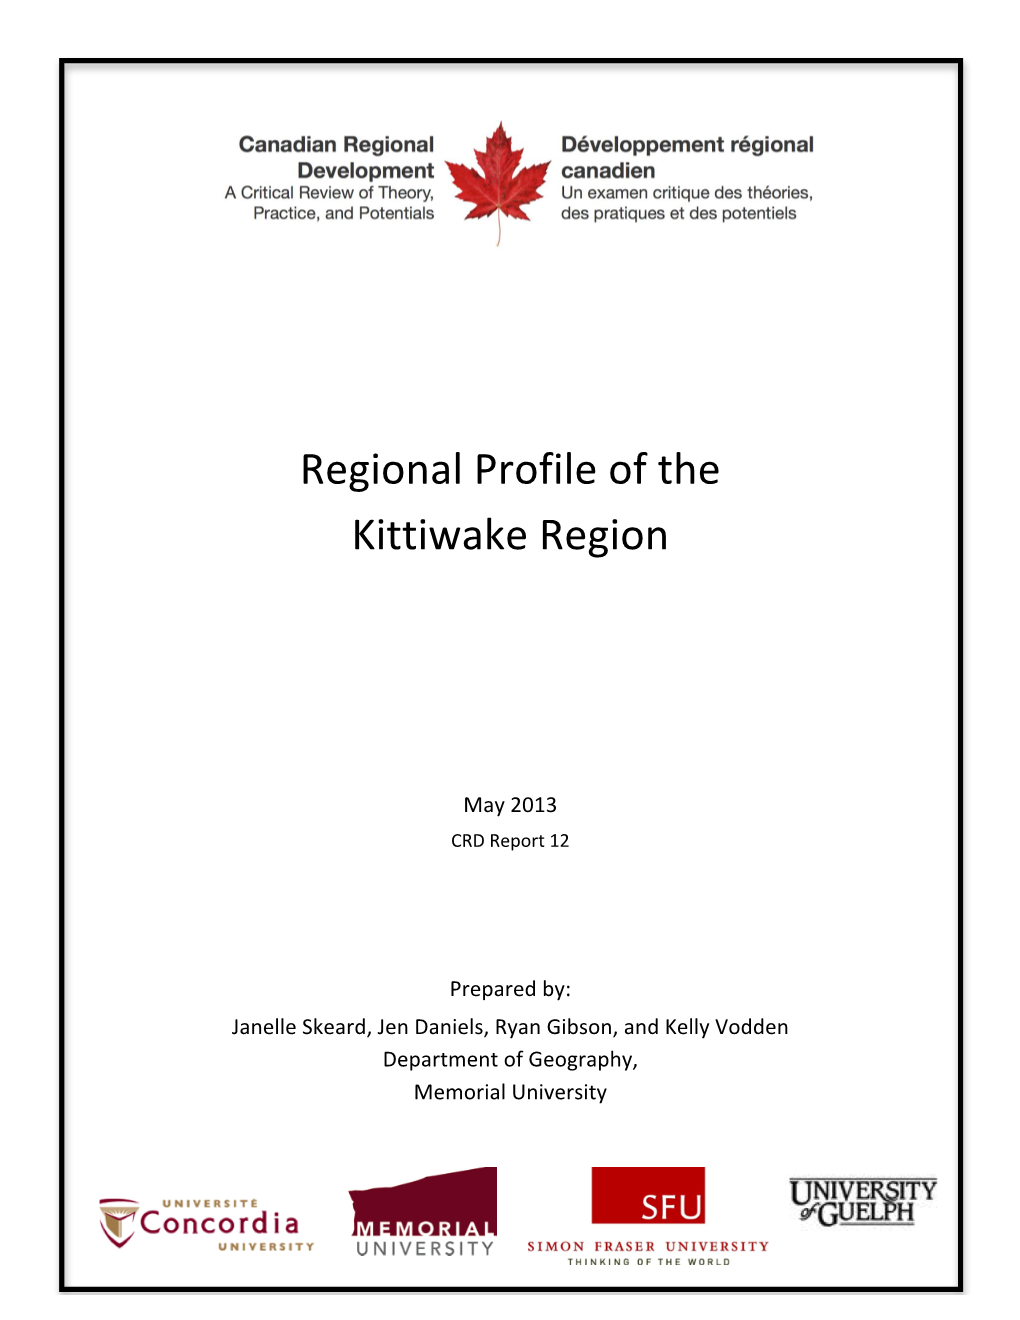 Regional Profile of the Kittiwake Region